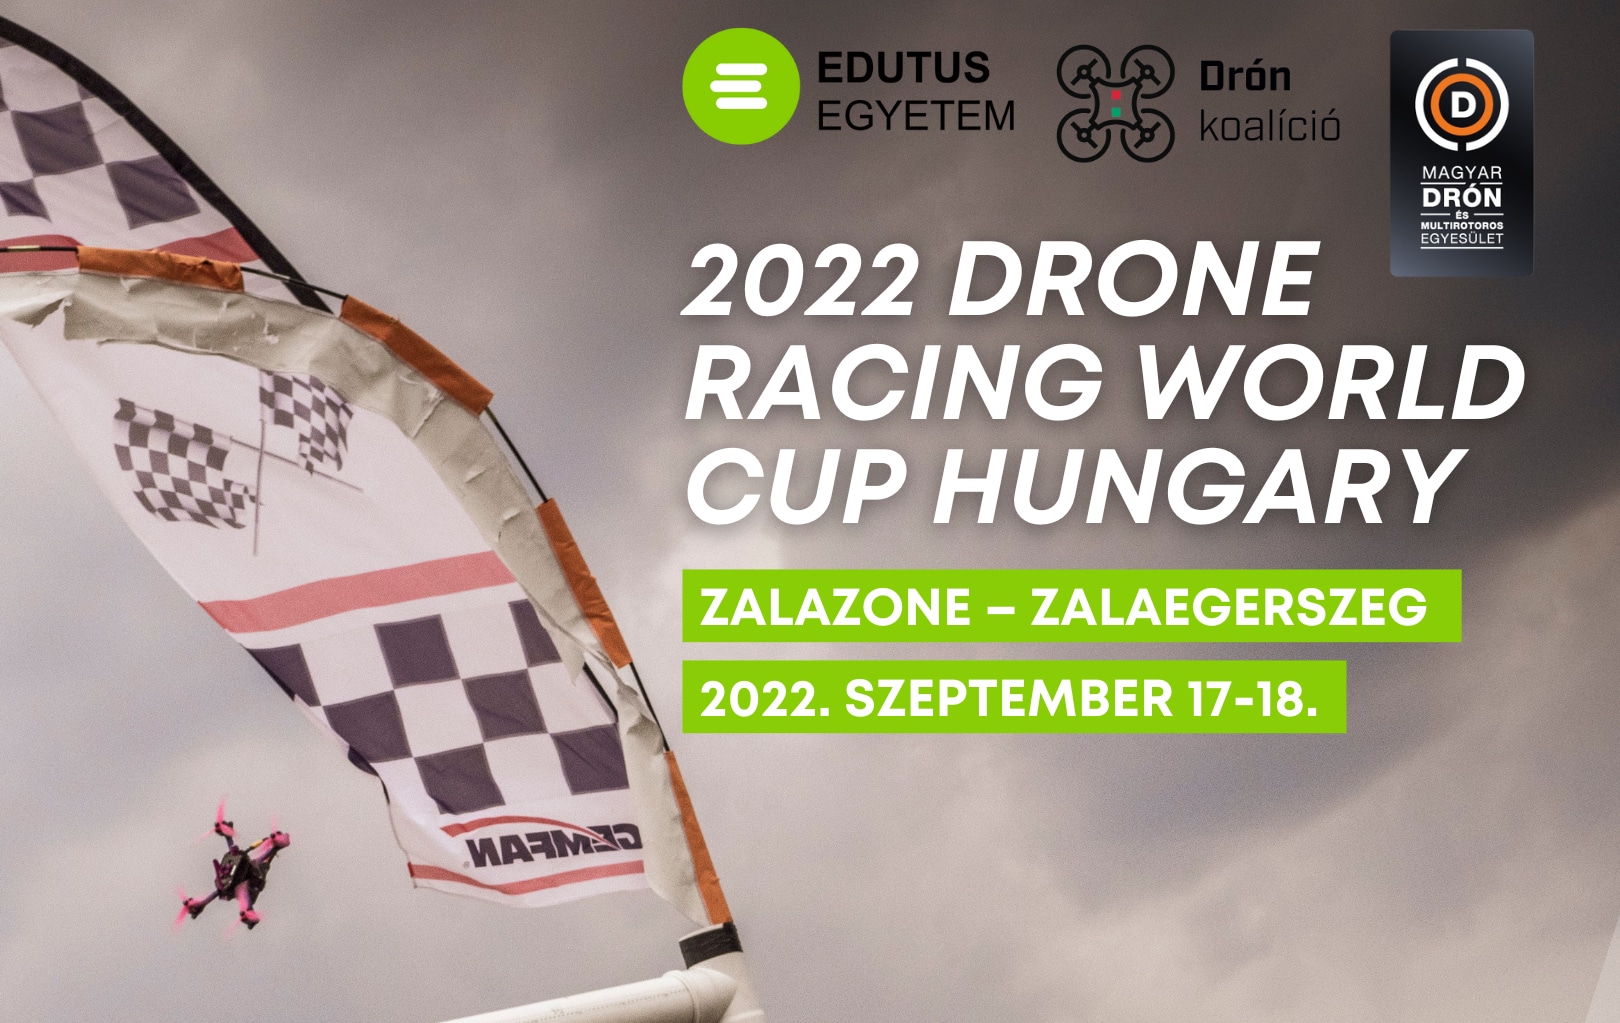 Drone Racing World Cup Hungary 2022